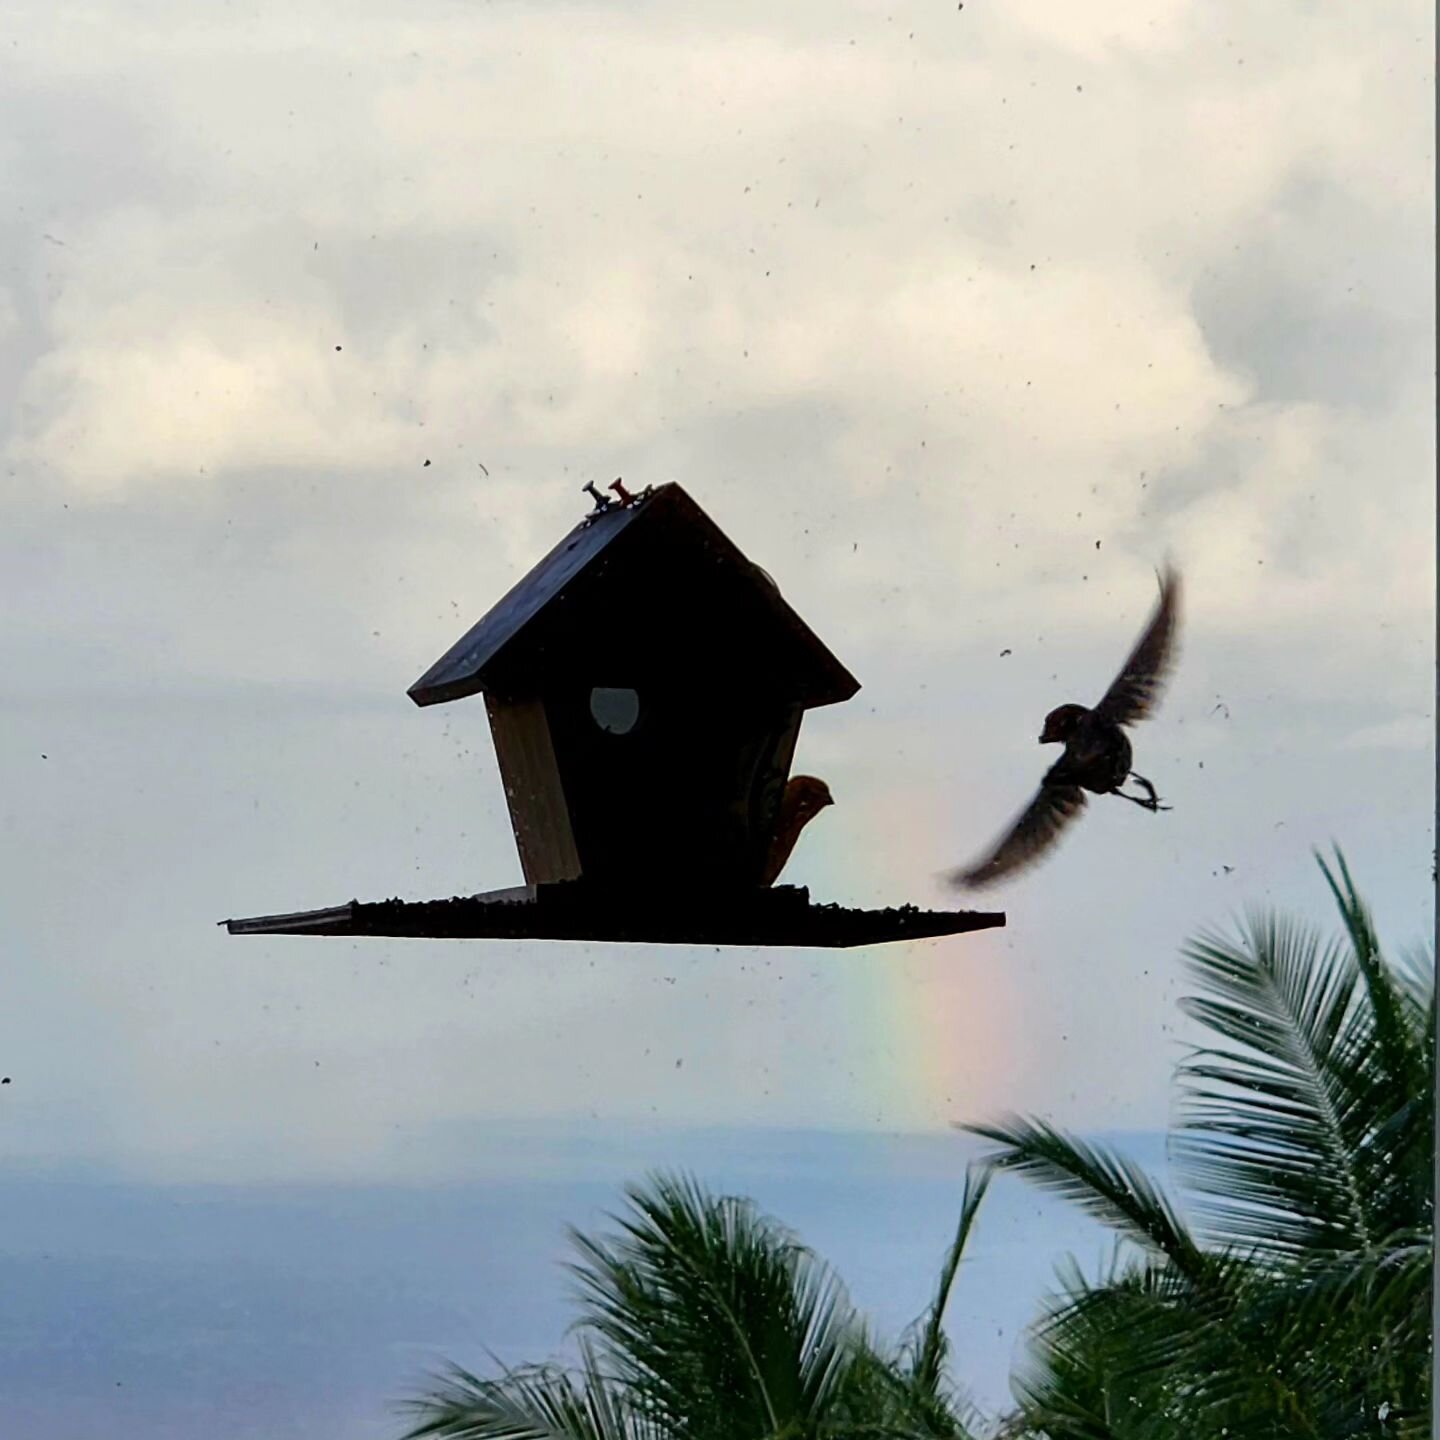 ...A fly by! #birdwatching #birding #birdwatchers #bird_visitation #morning_birds #birdlove #oceanview #islandlife #rainbow #saffronfinch #clouds #instabird